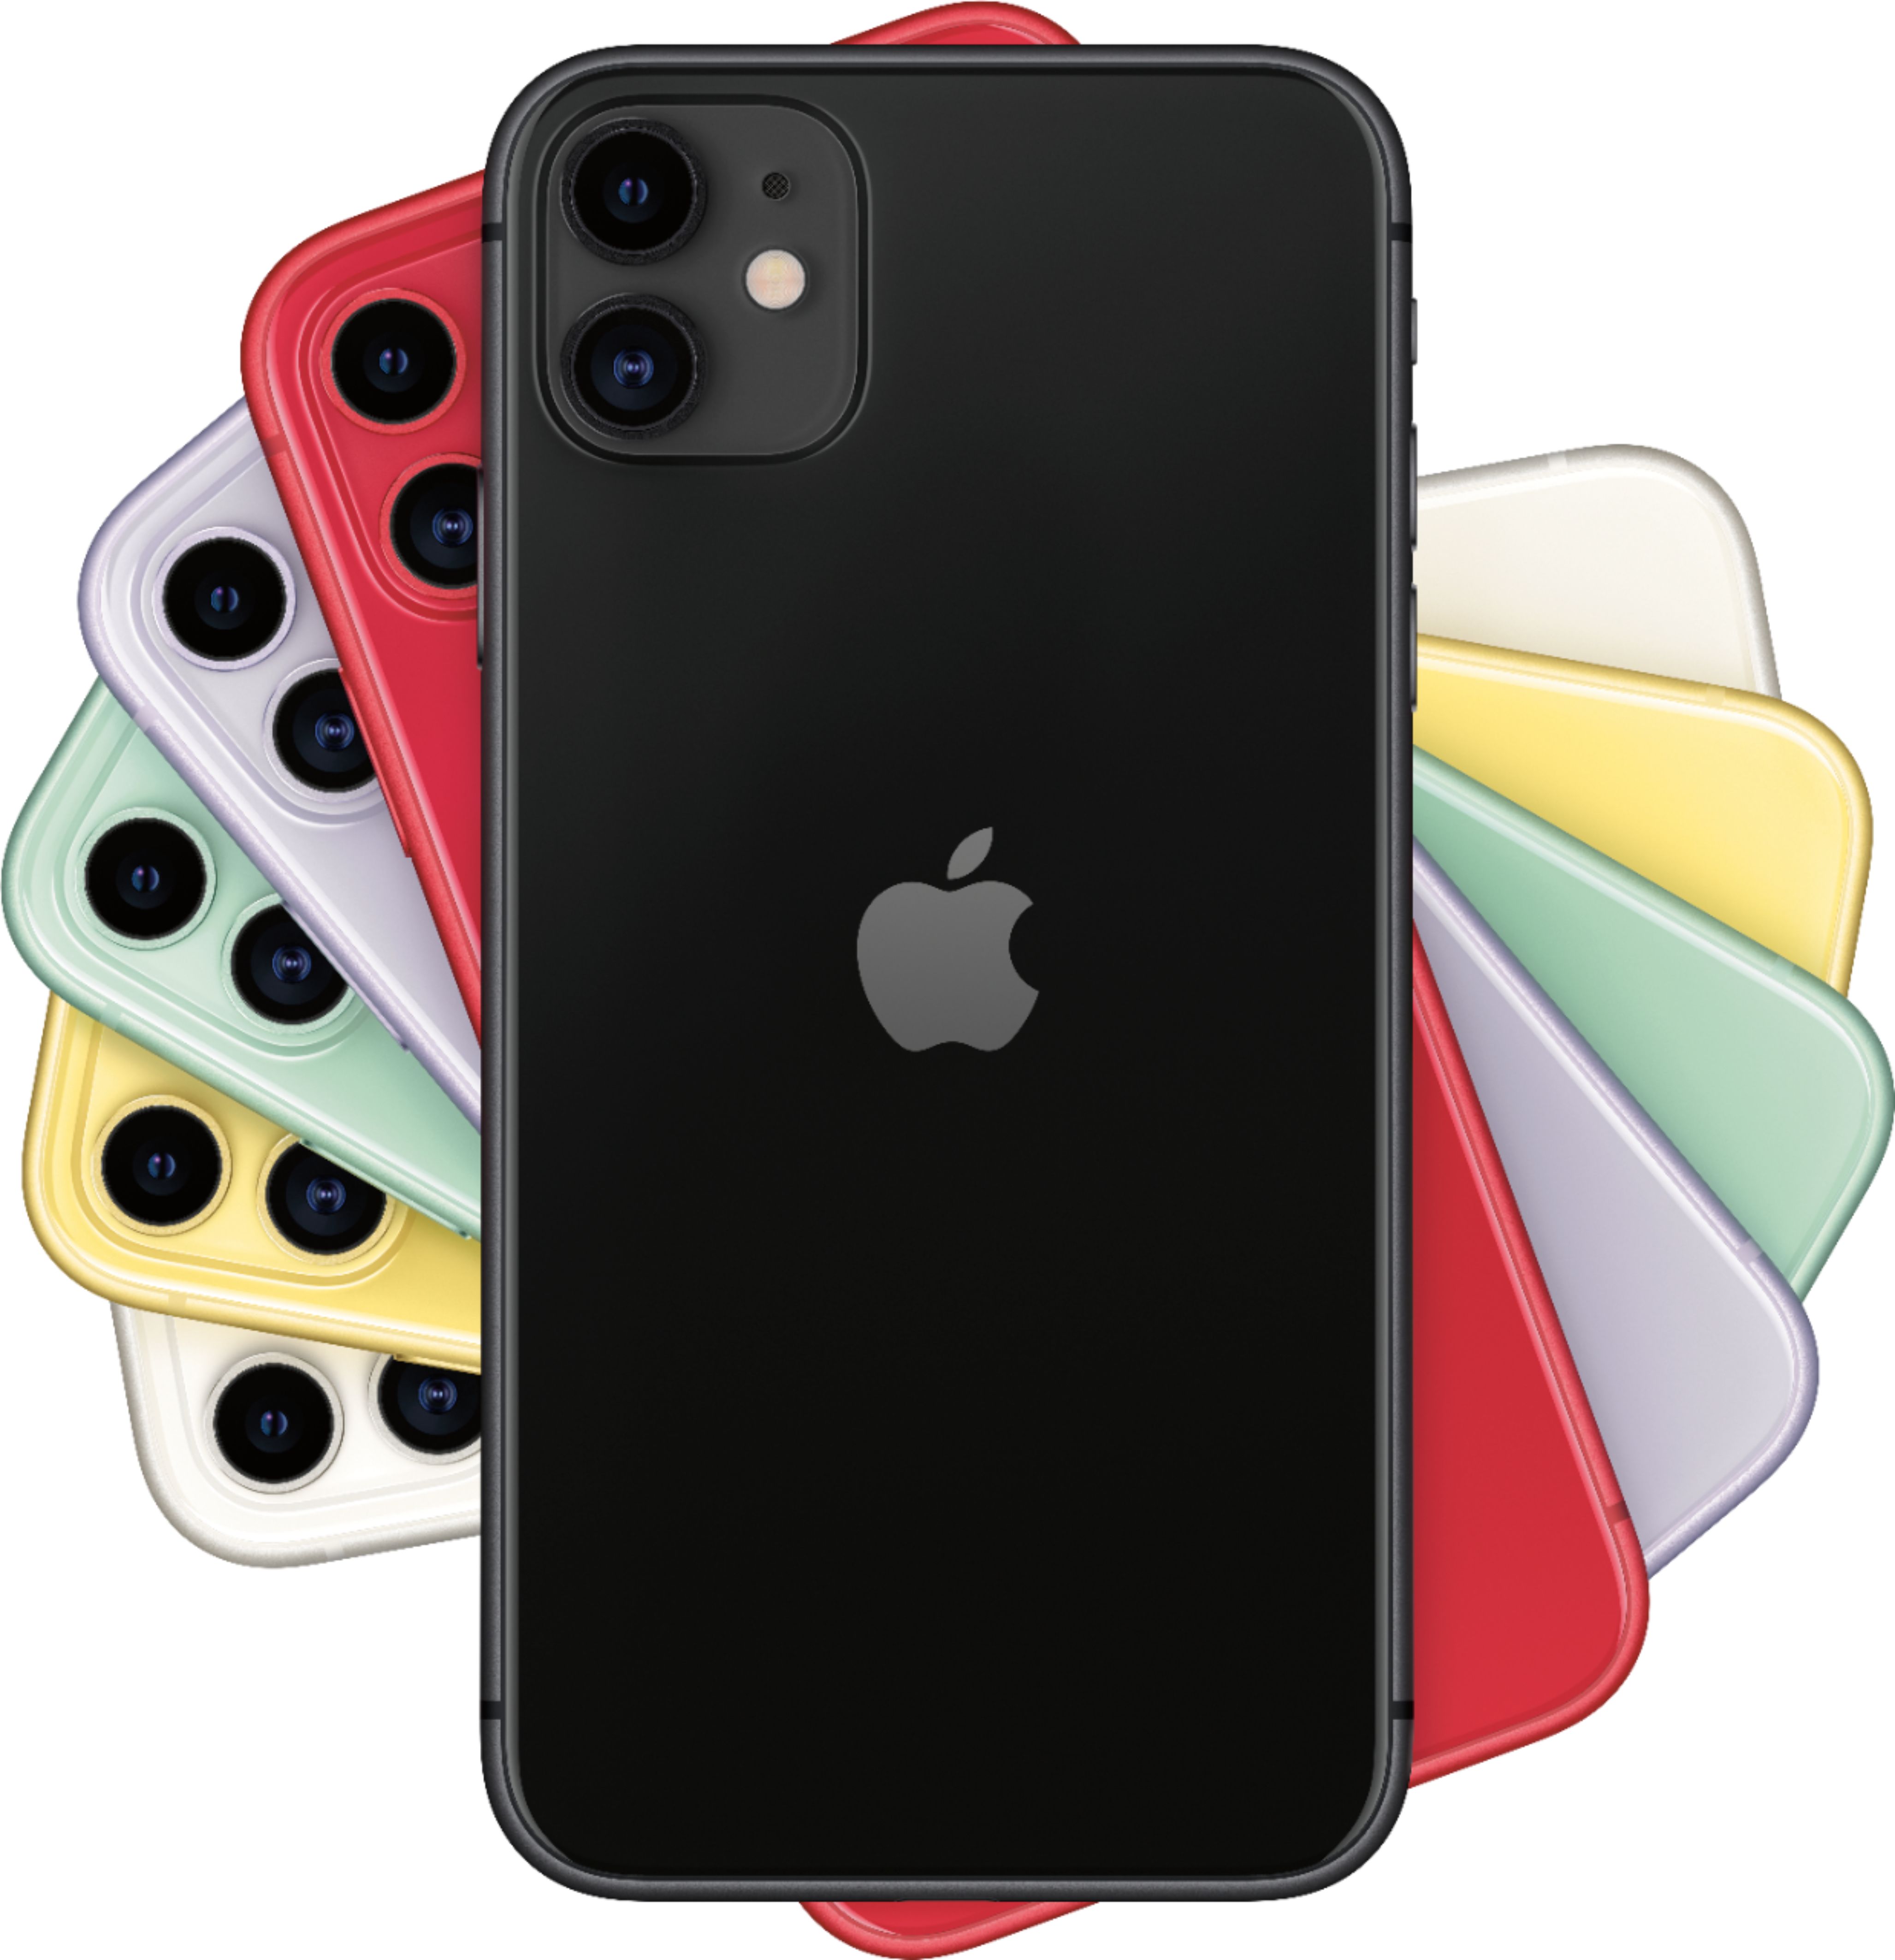 Apple iPhone 11 64GB Black (AT&T) MWL72LL/A - Best Buy